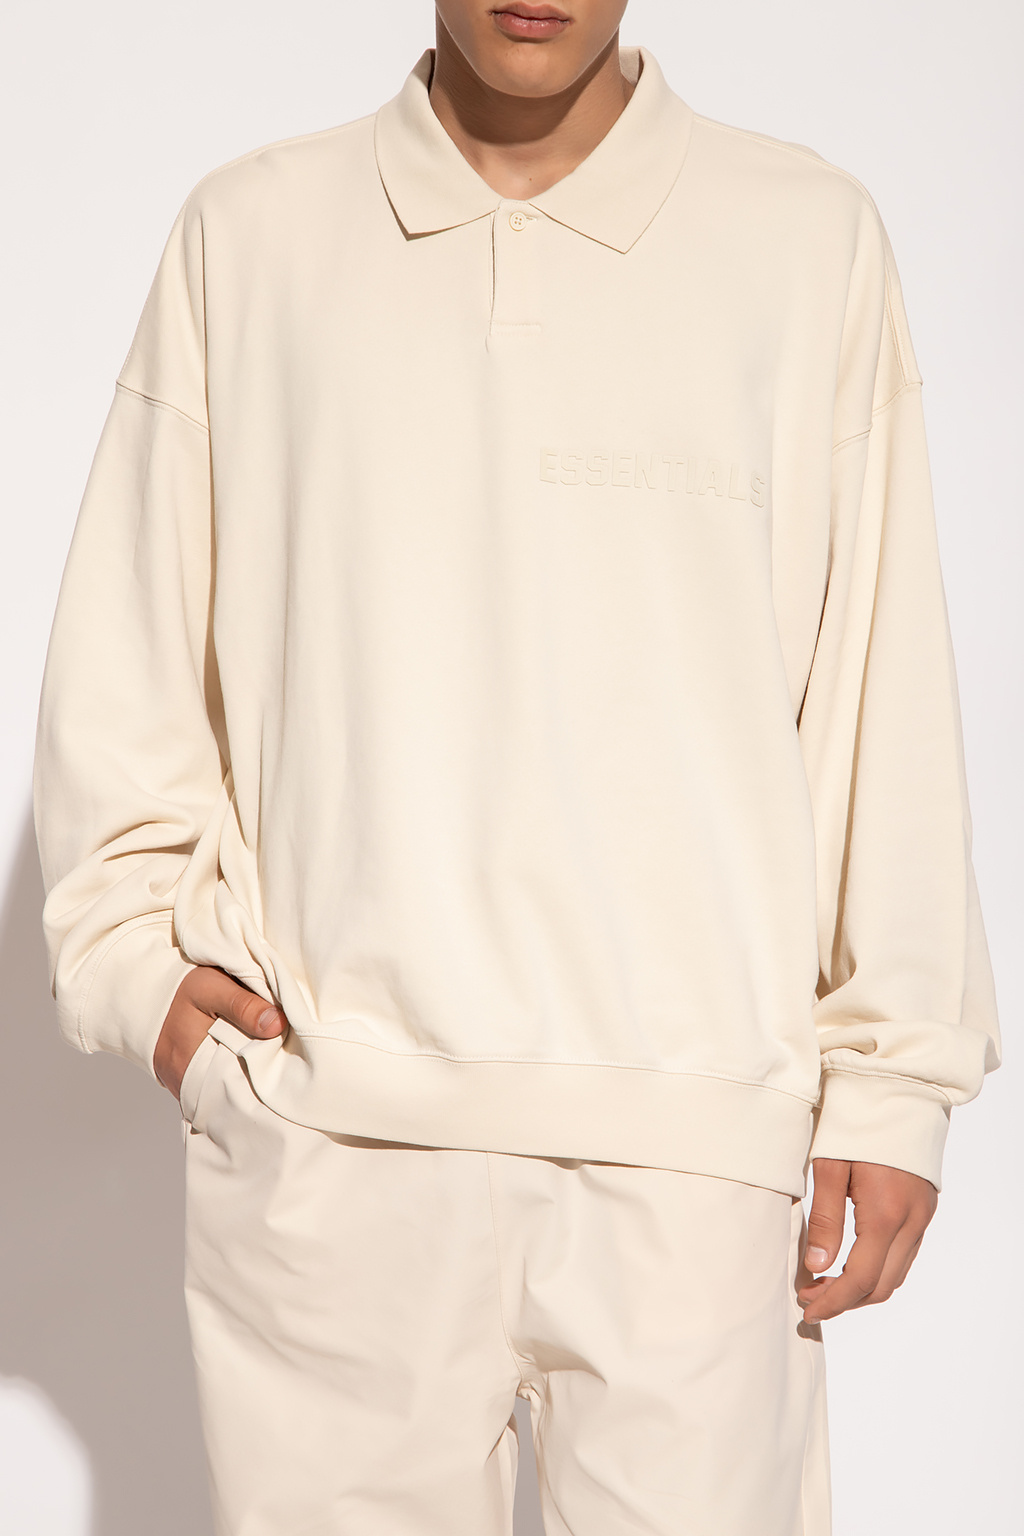 Nike Tee Energy Mens T-shirt - Cream Sweatshirt with collar